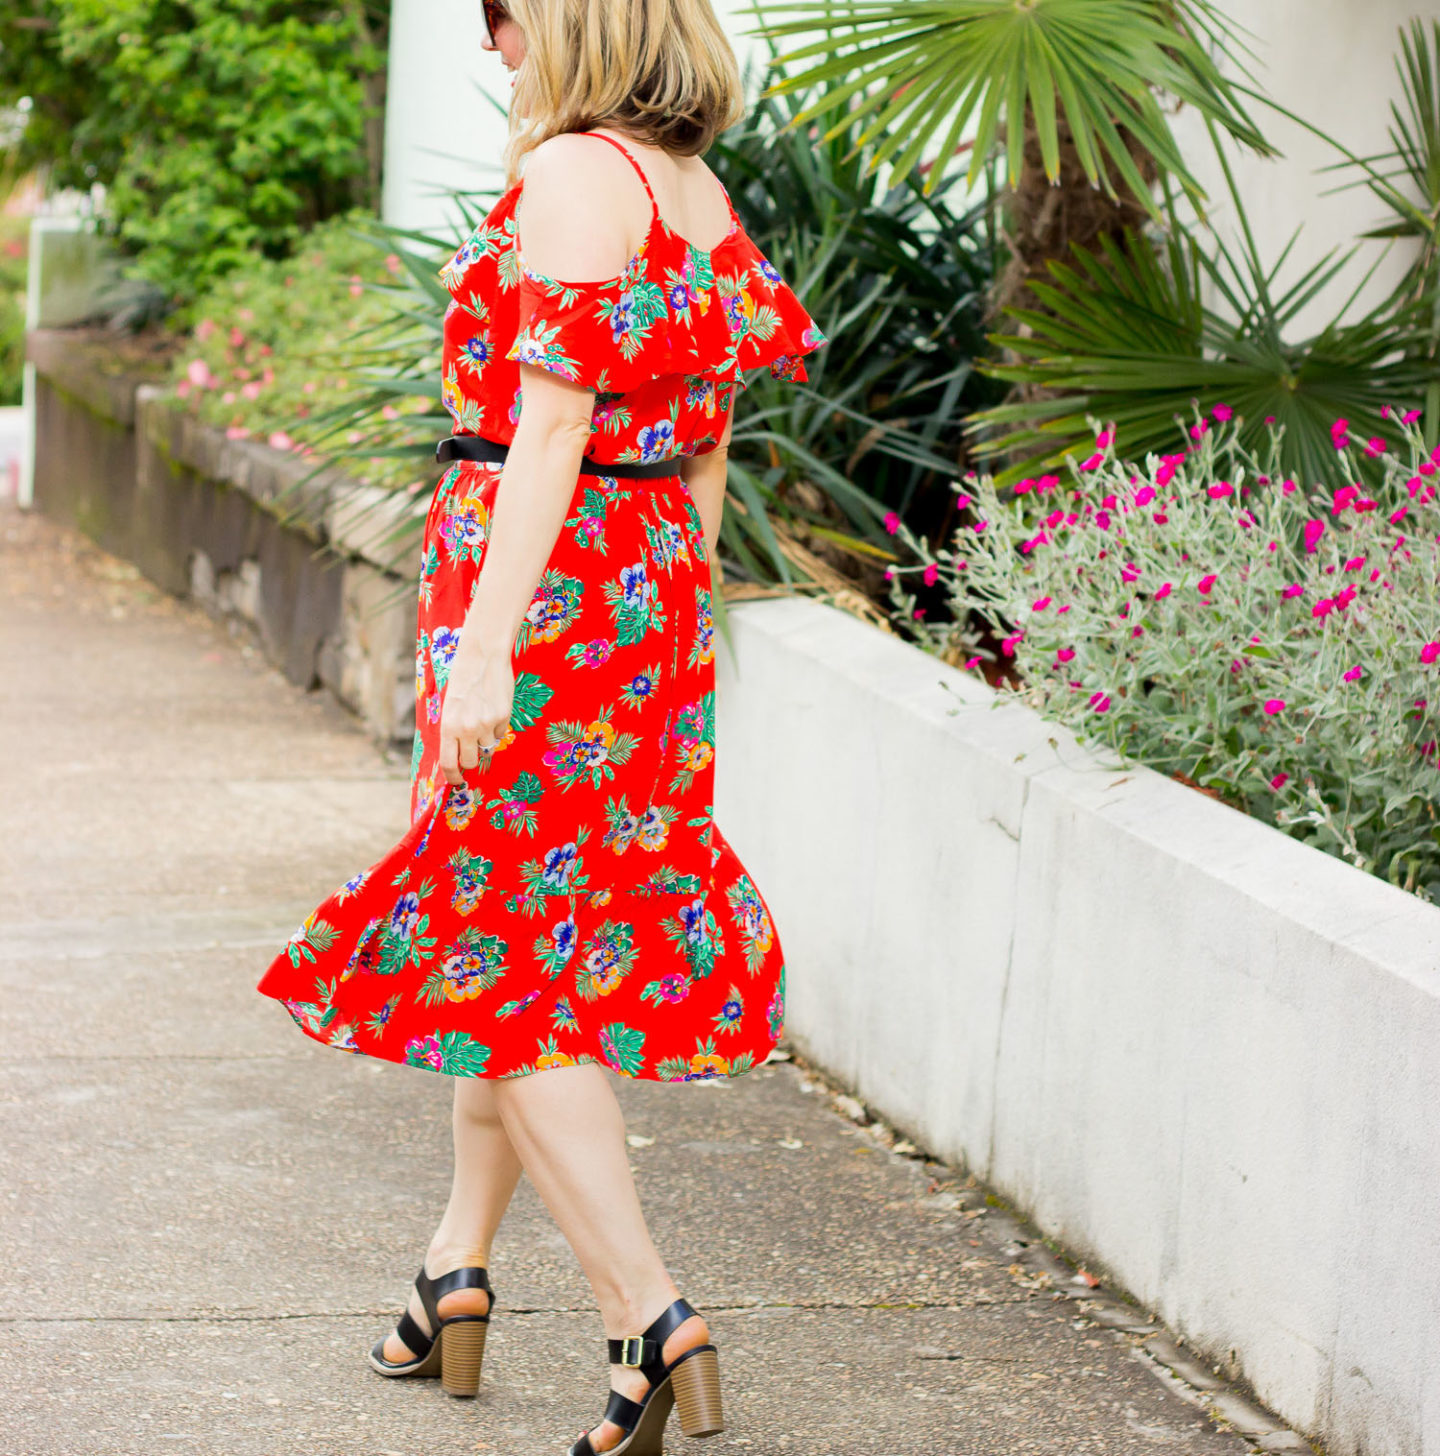 Red floral skirt on Belle Meets World blog